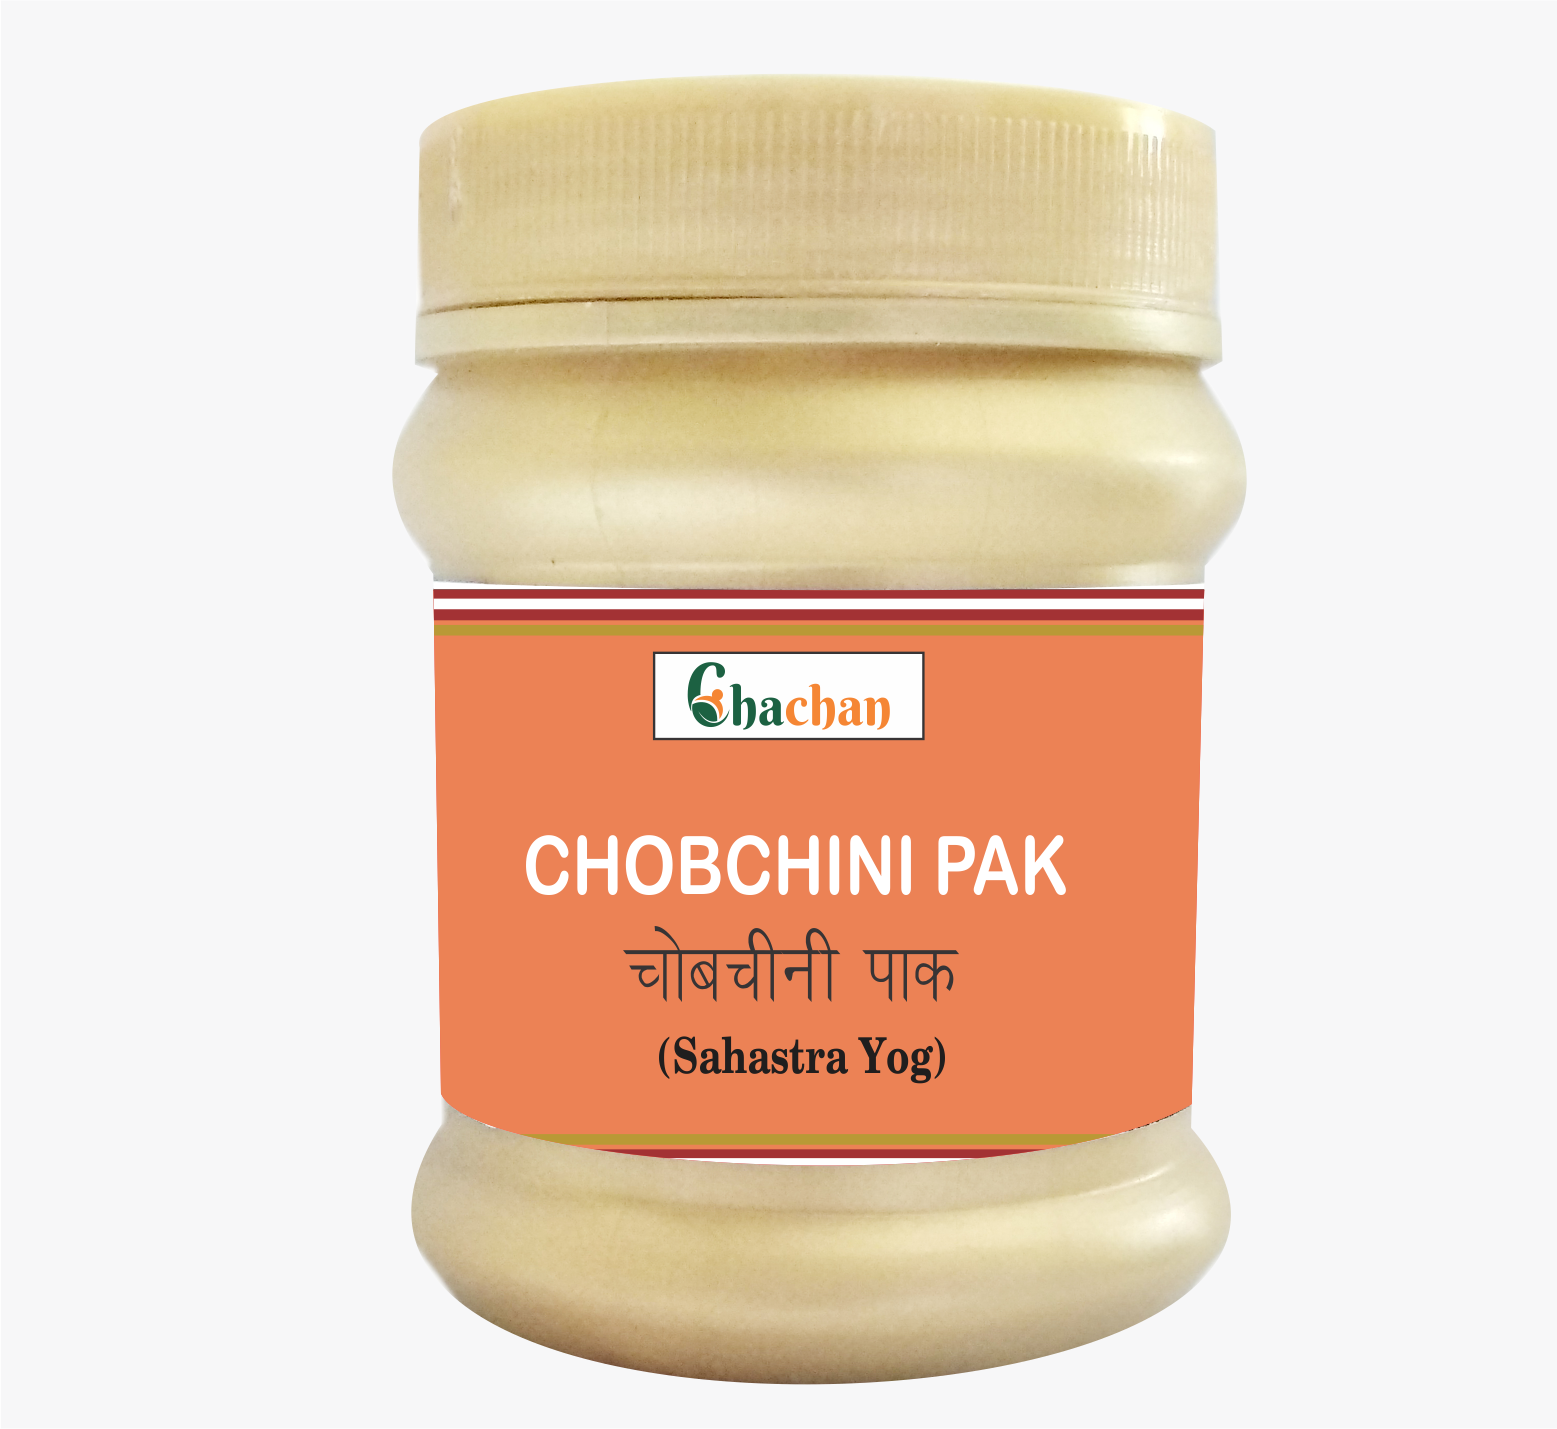 CHACHAN CHOBCHINI PAK BY DINDAYAL BHAWAN